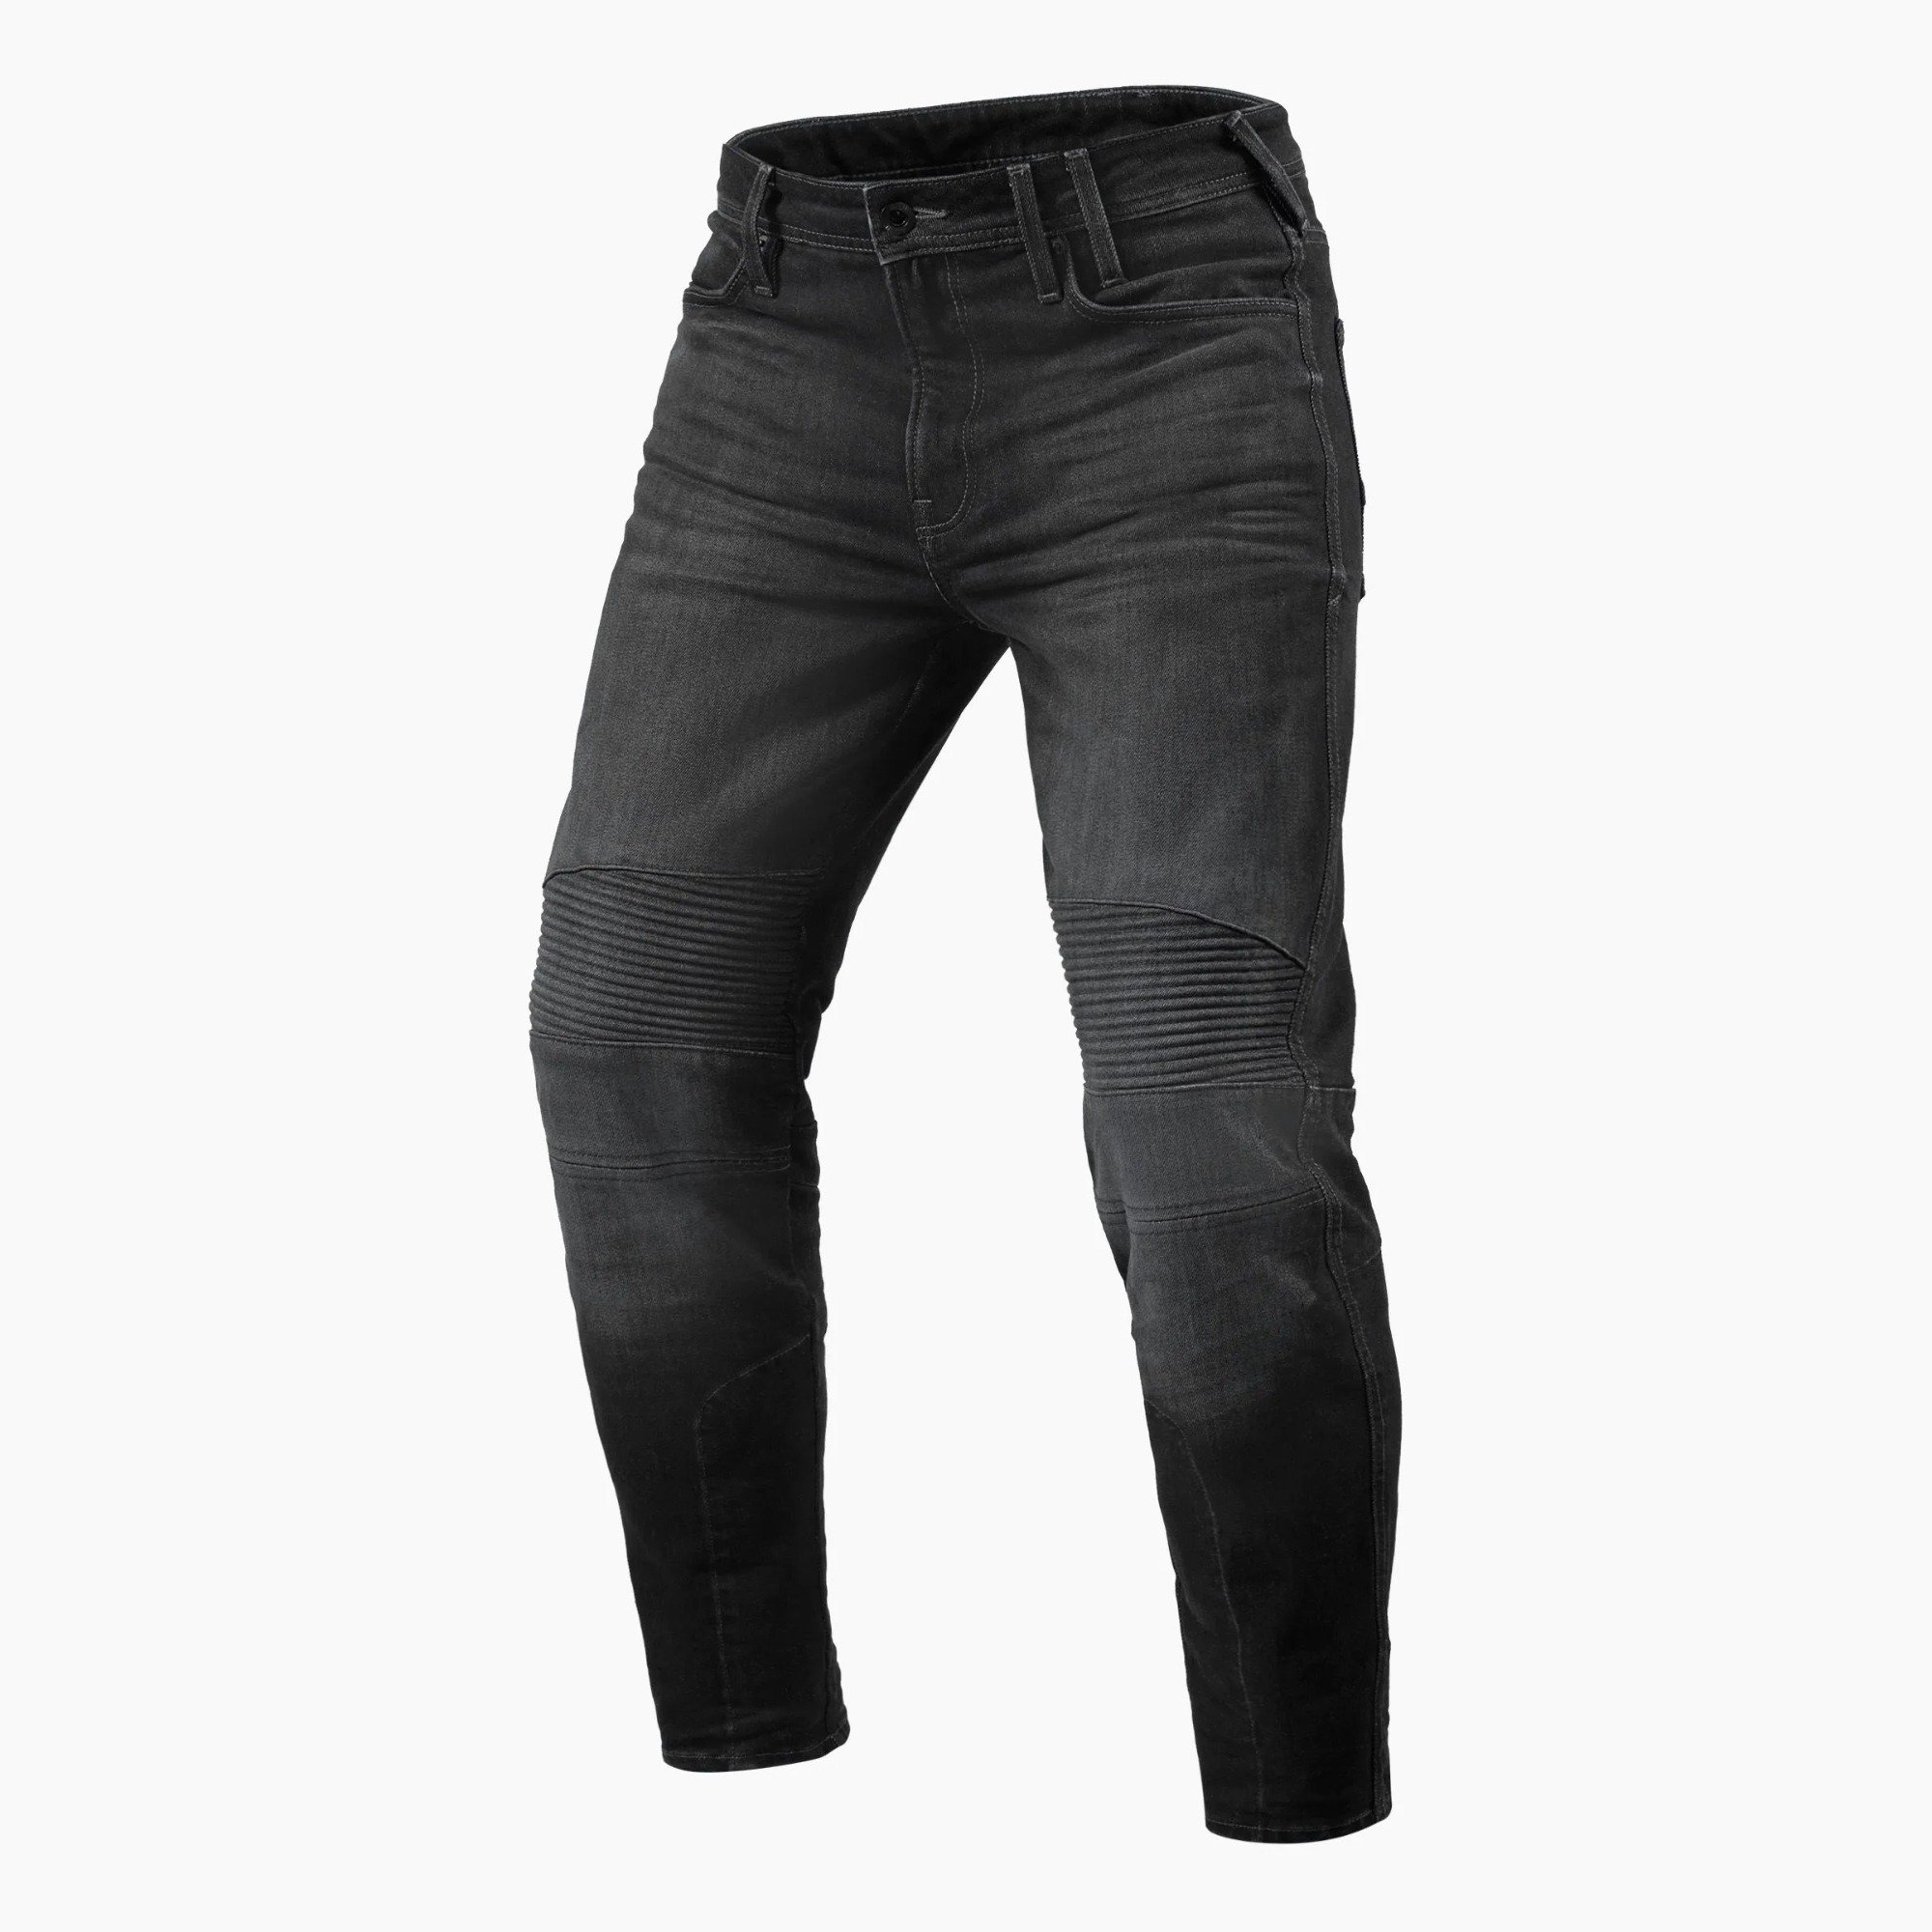 Image of REV'IT! Jeans Moto 2 TF Dark Grey Used Motorcycle Jeans Talla L32/W30